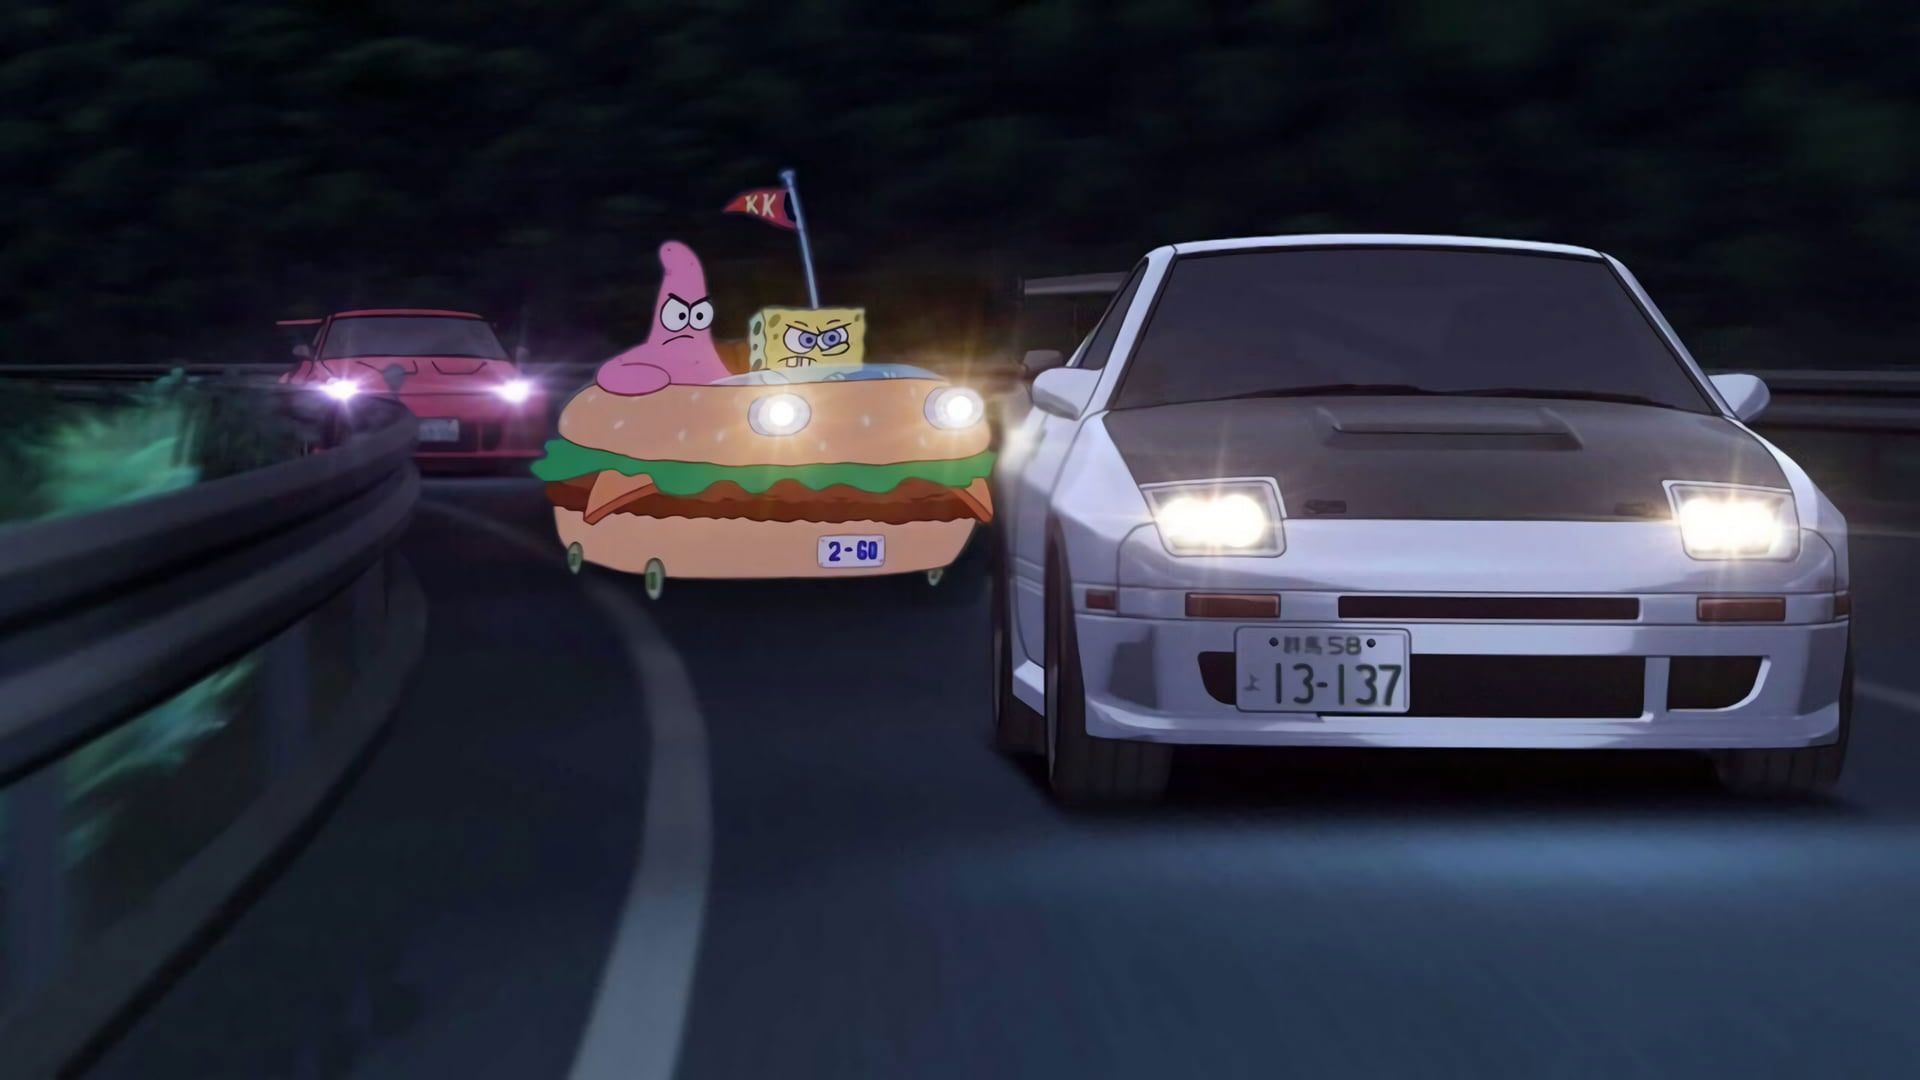 Anime Jdm Cars Wallpapers